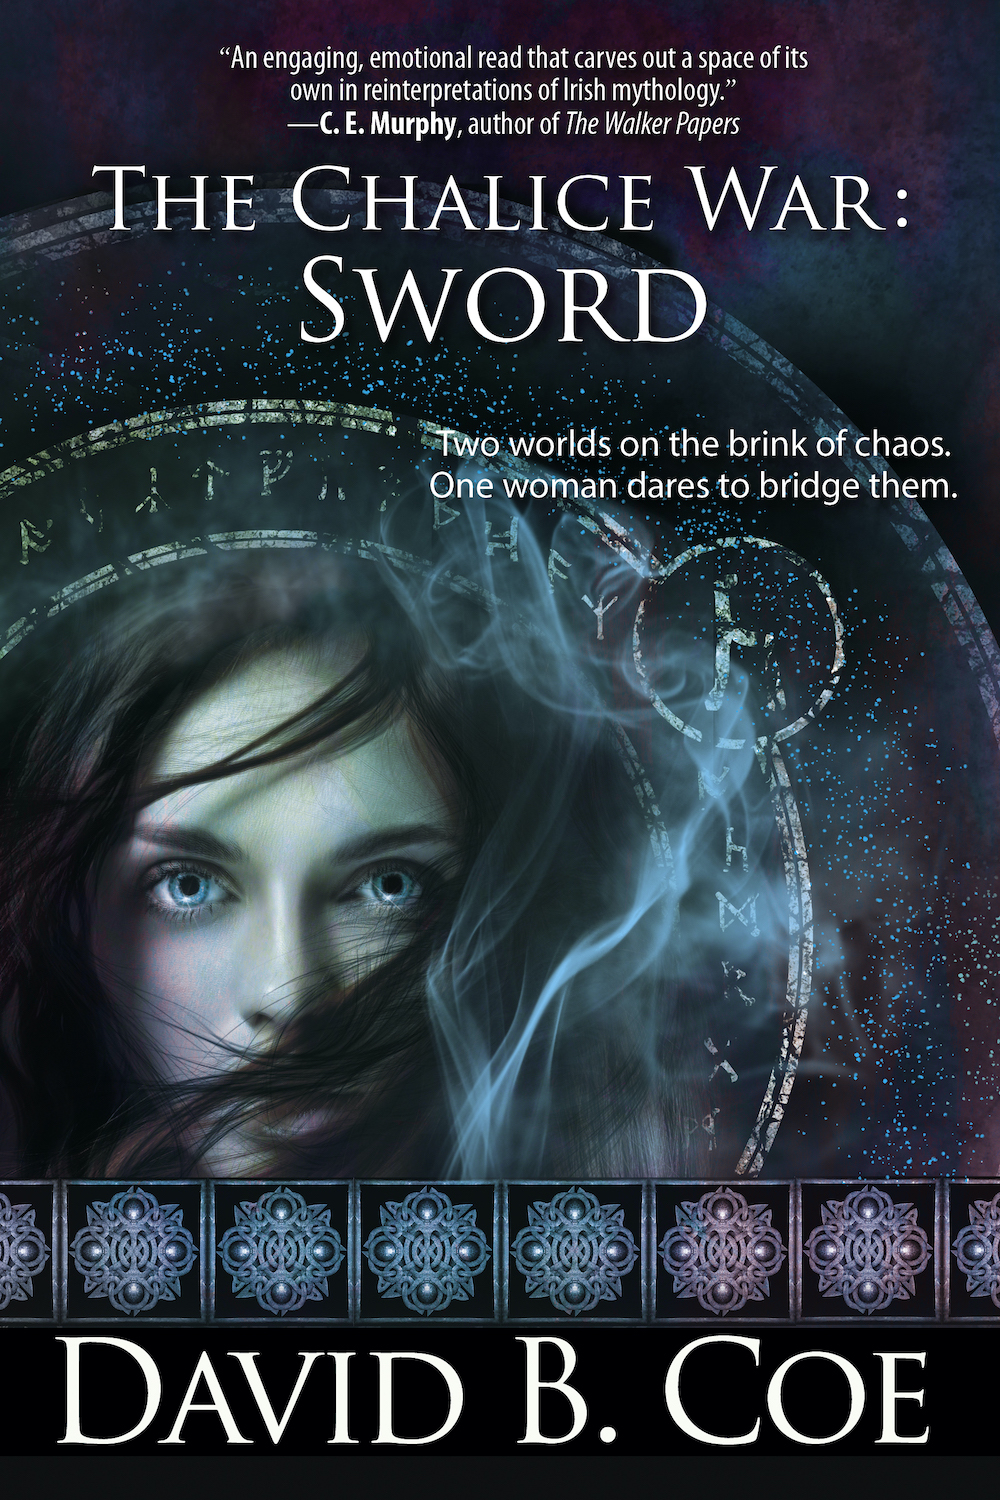 The Chalice War: Sword, by David B. Coe